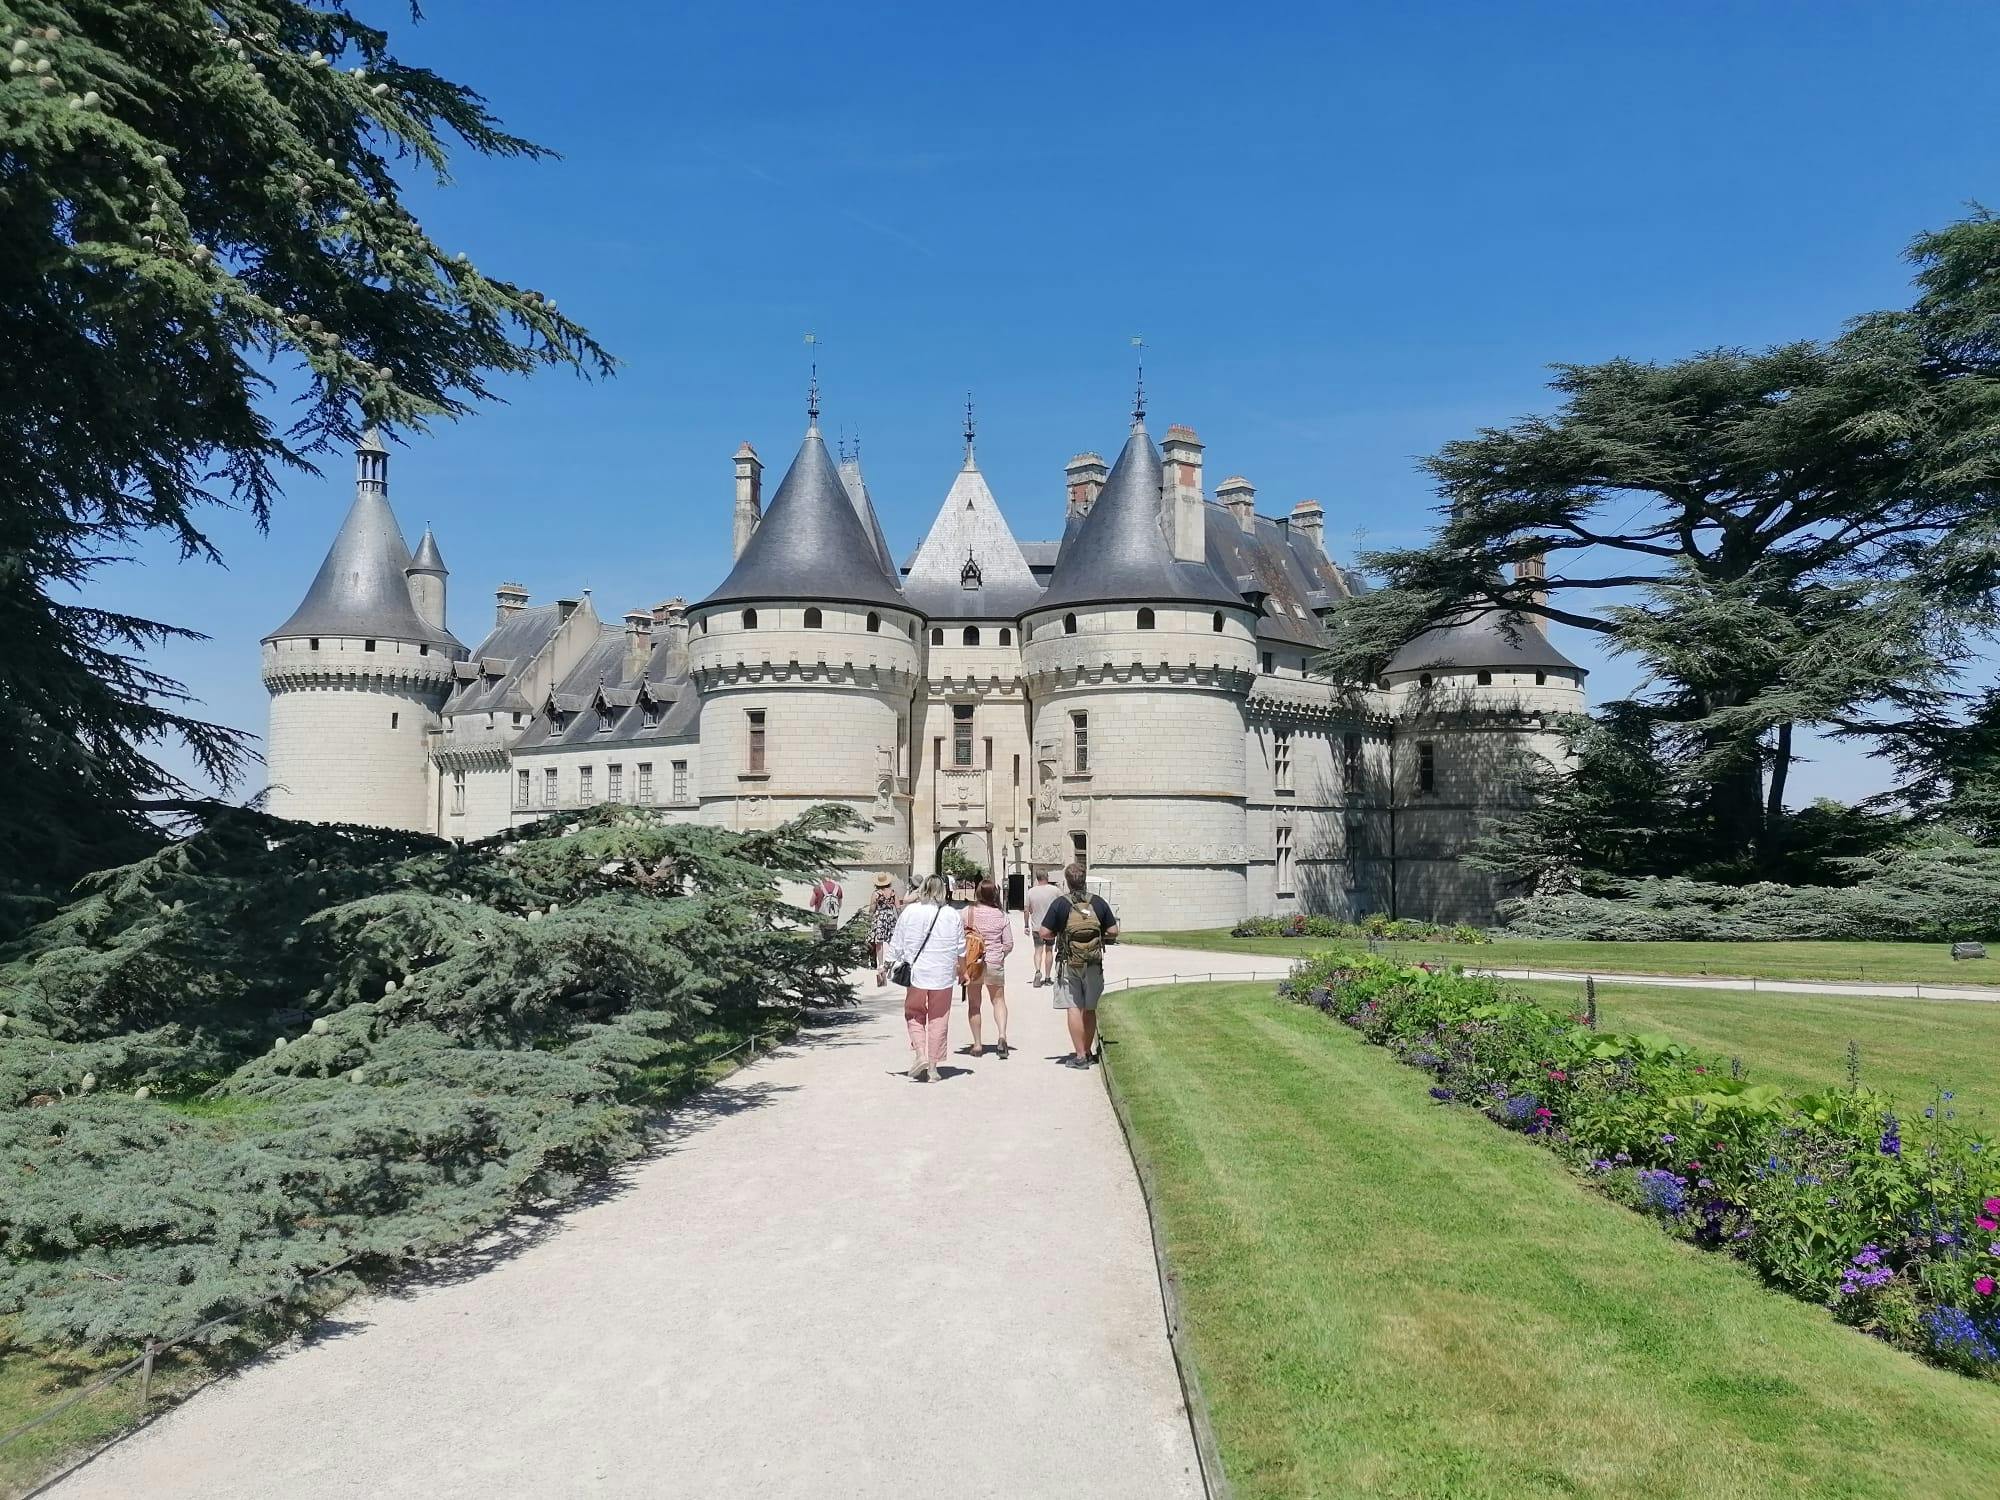 Tour de bicicleta pelo Vale do Loire com visita ao Castelo Chaumont-sur-Loire